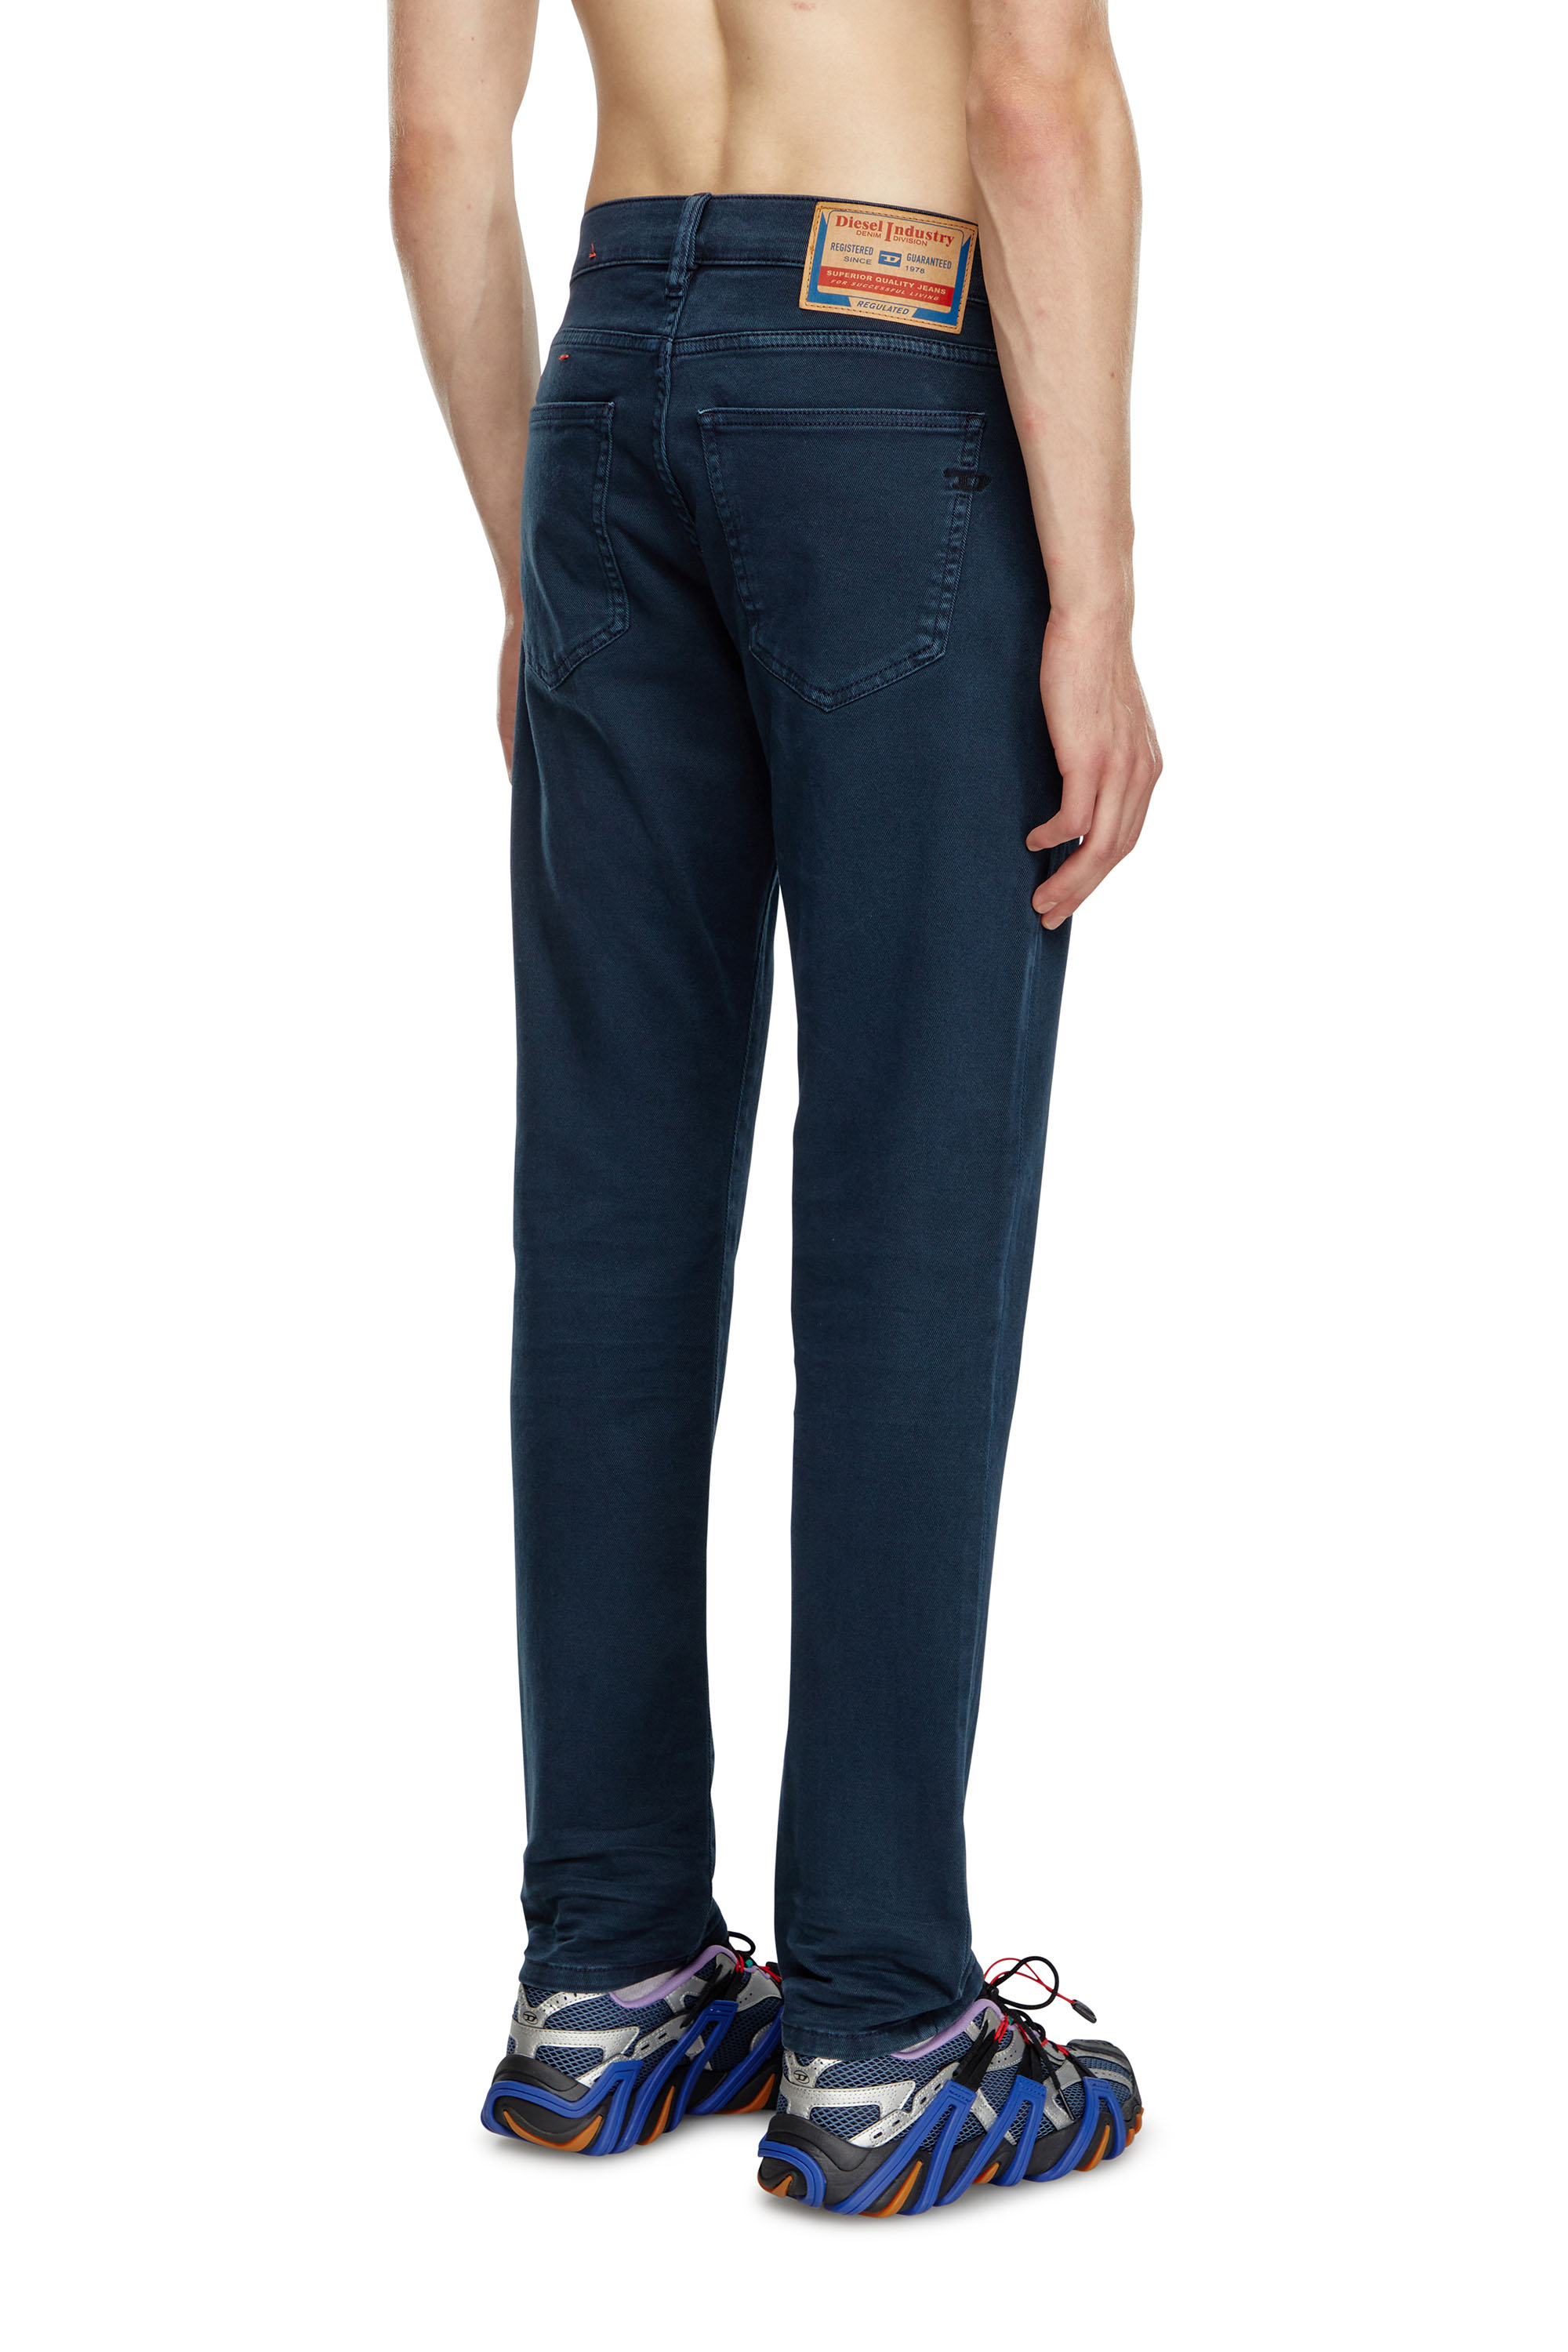 Diesel - Slim Jeans 2019 D-Strukt 0QWTY, Hombre Slim Jeans - 2019 D-Strukt in Azul marino - Image 4